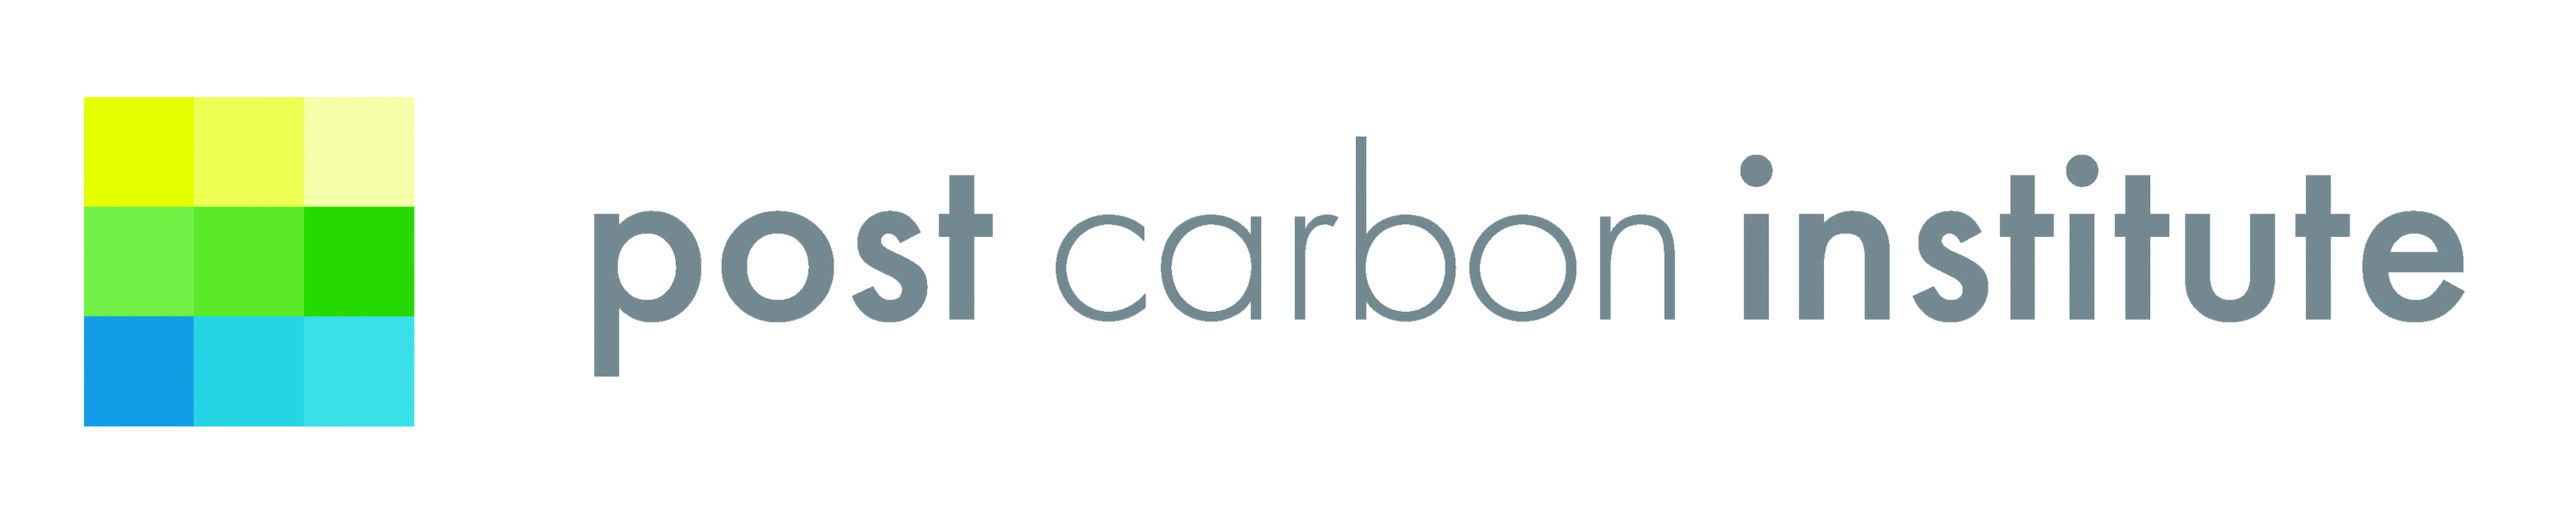 post carbon institute scaled